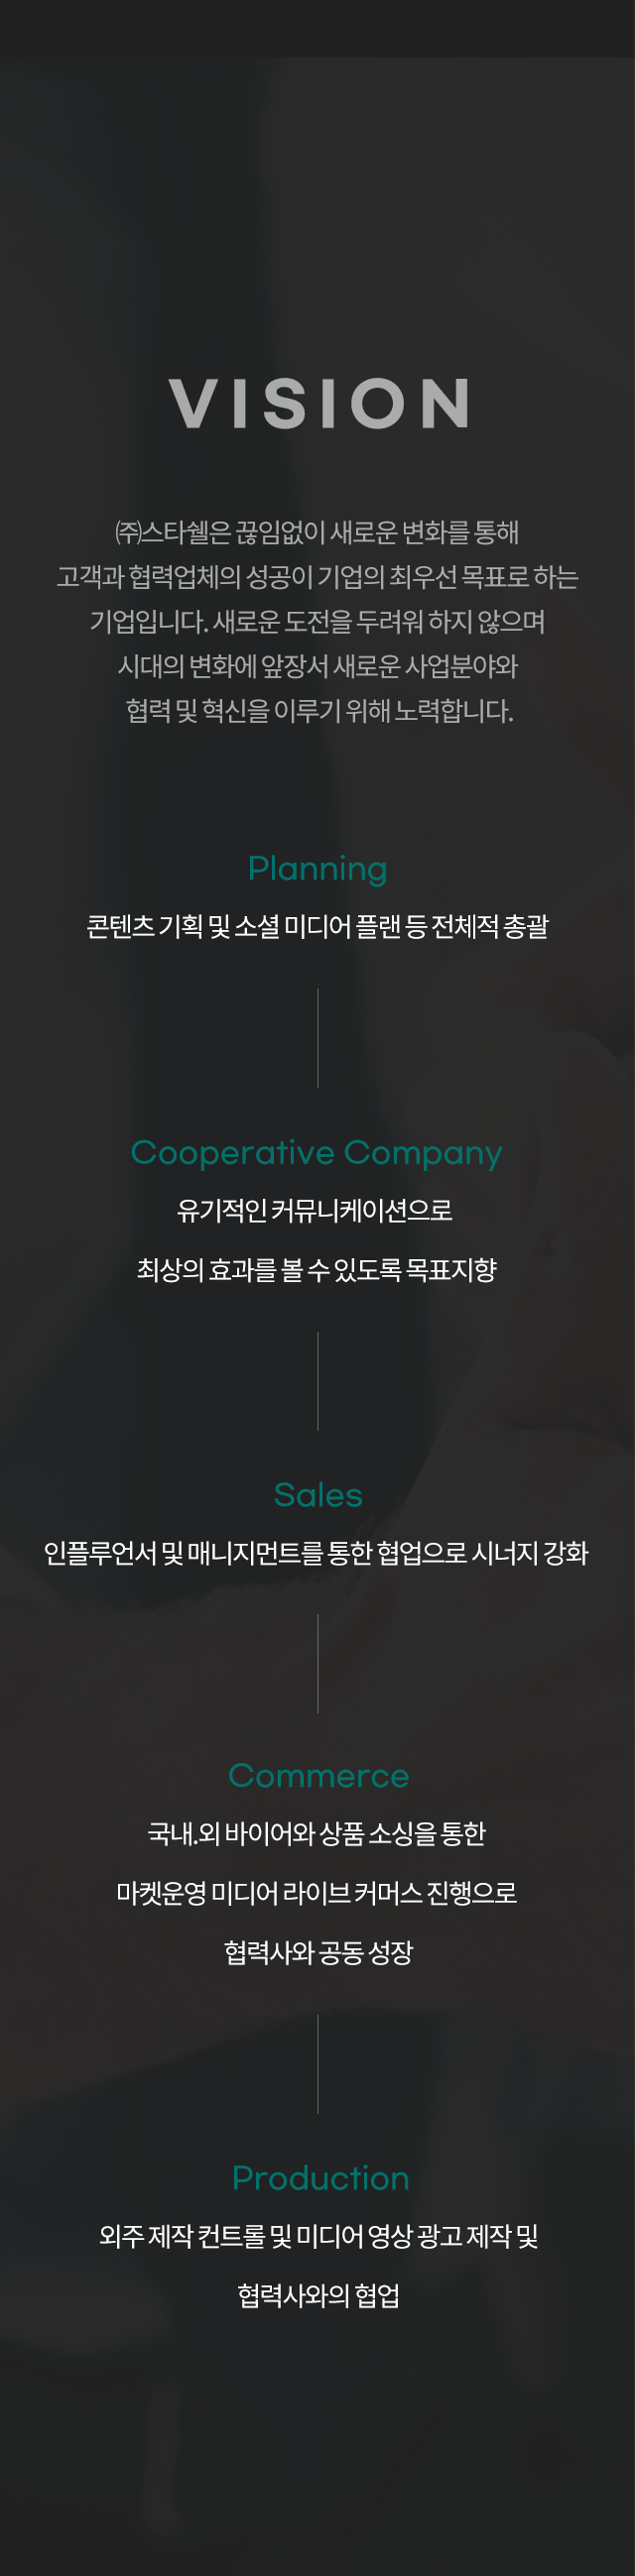 company1 mobile image